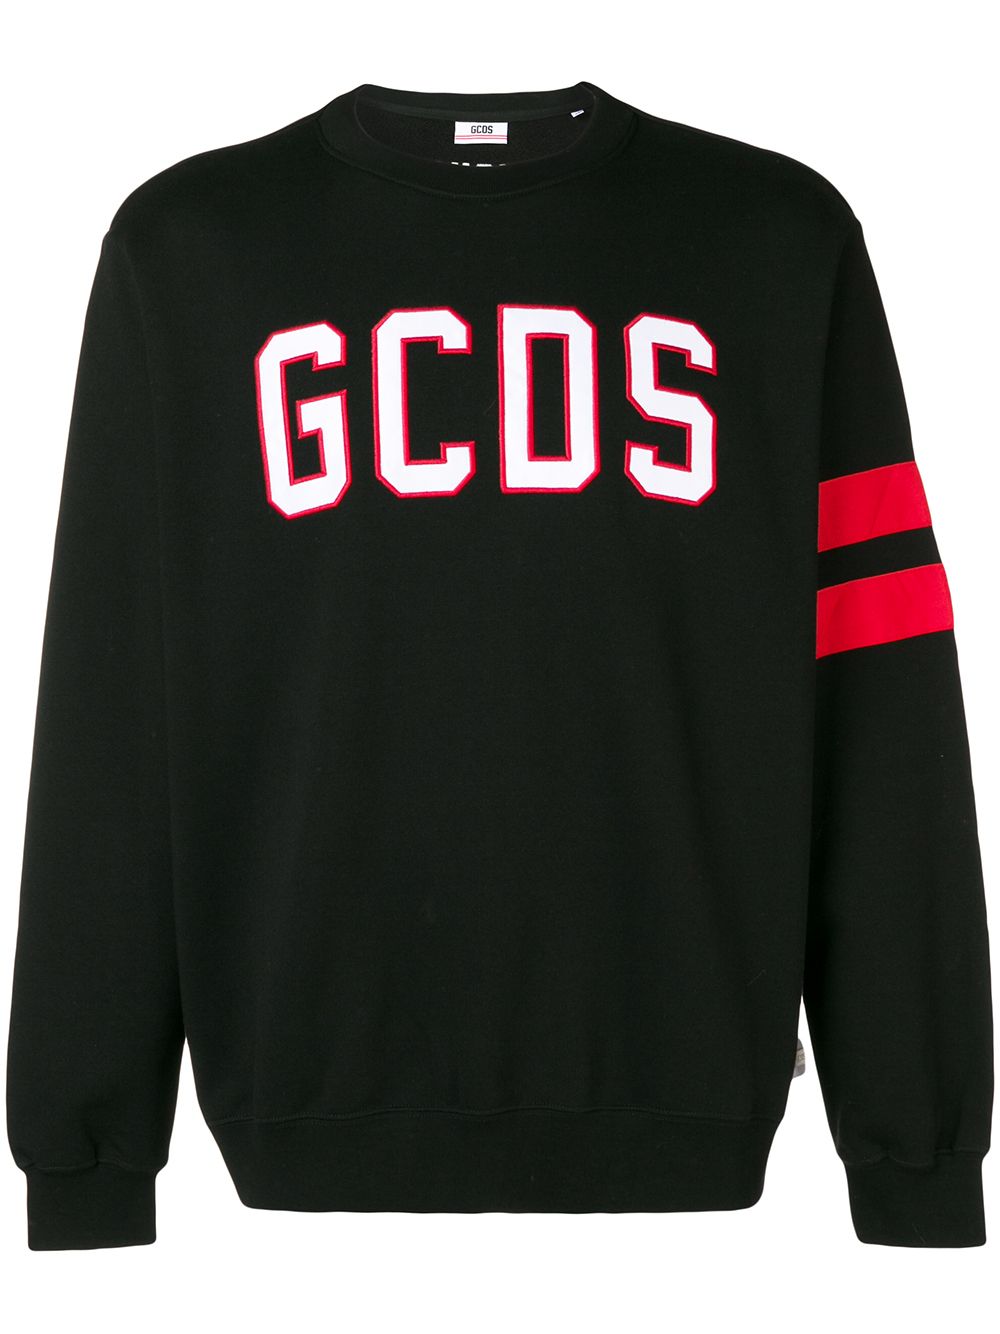 фото Gcds свитер с логотипом